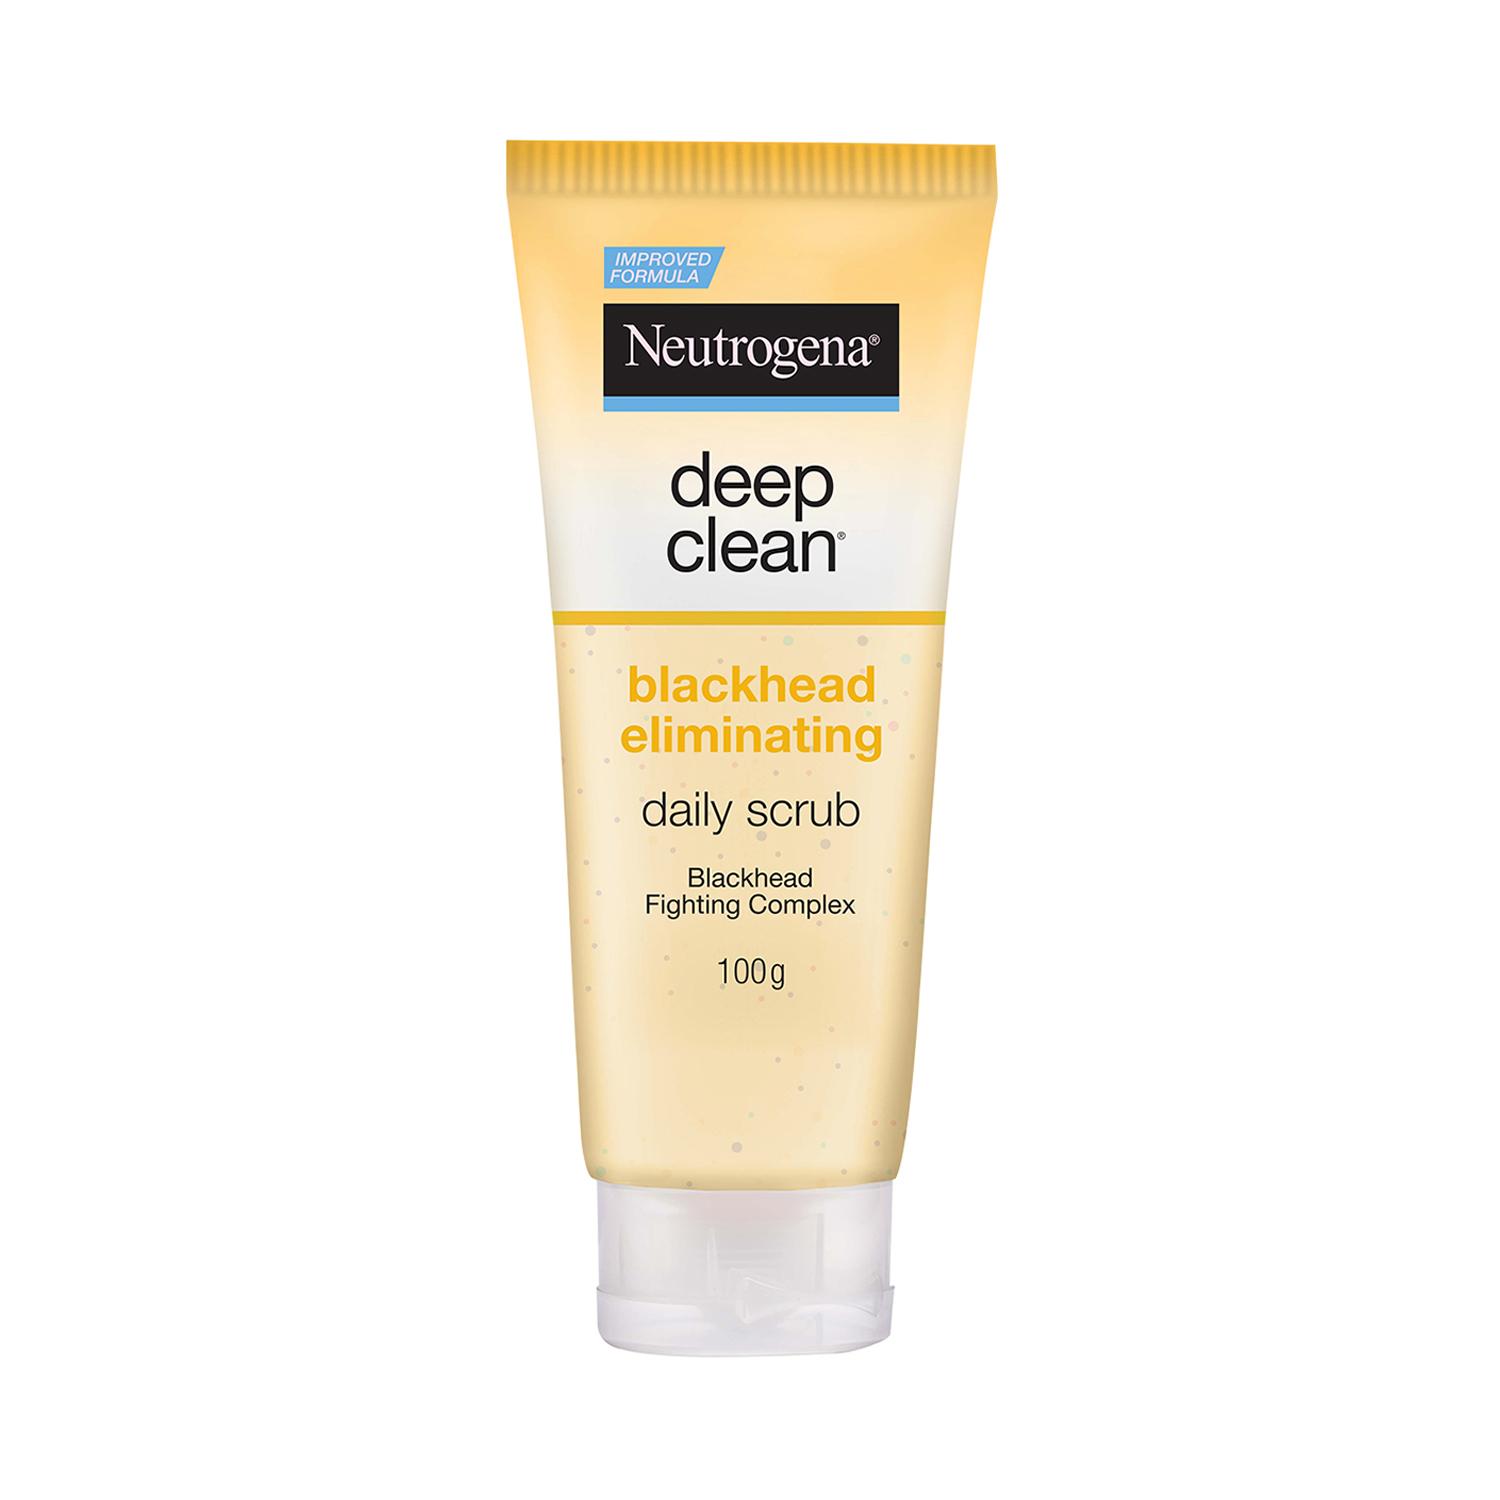 Neutrogena | Neutrogena Deep Clean Blackhead Eliminating Daily Scrub (100g)